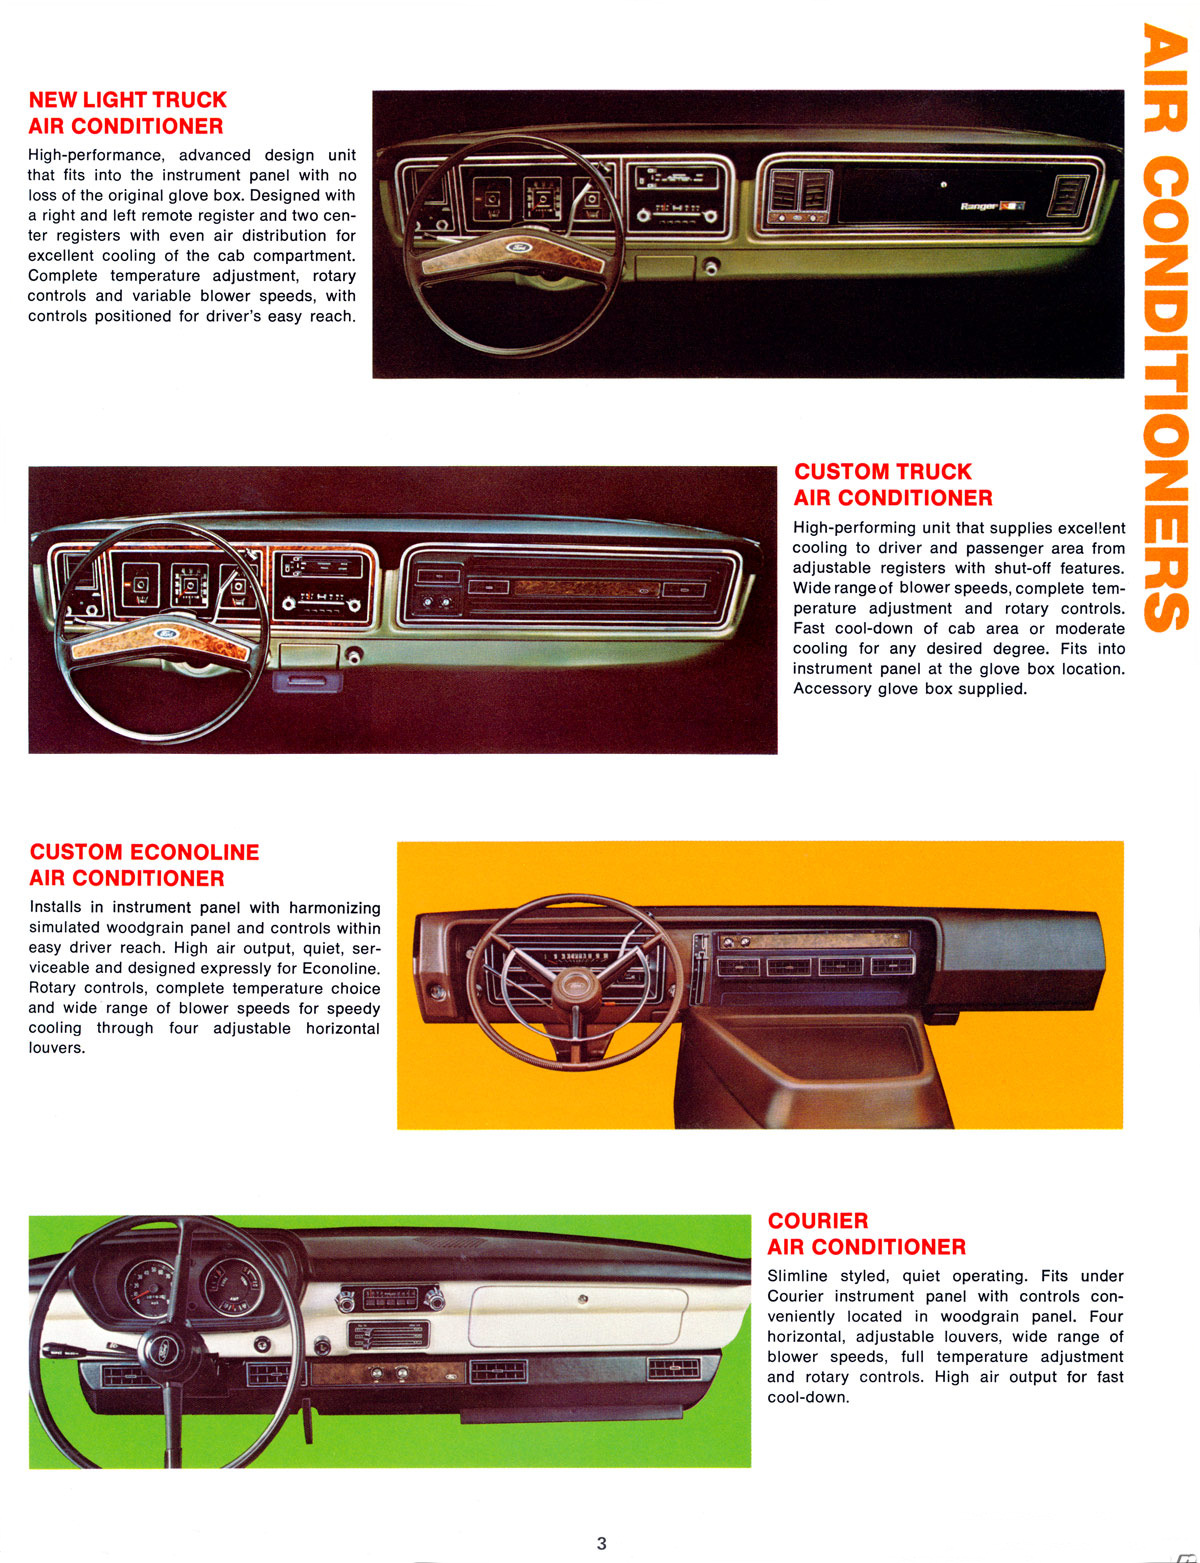 n_1974 Ford Triuck Accessories-03.jpg